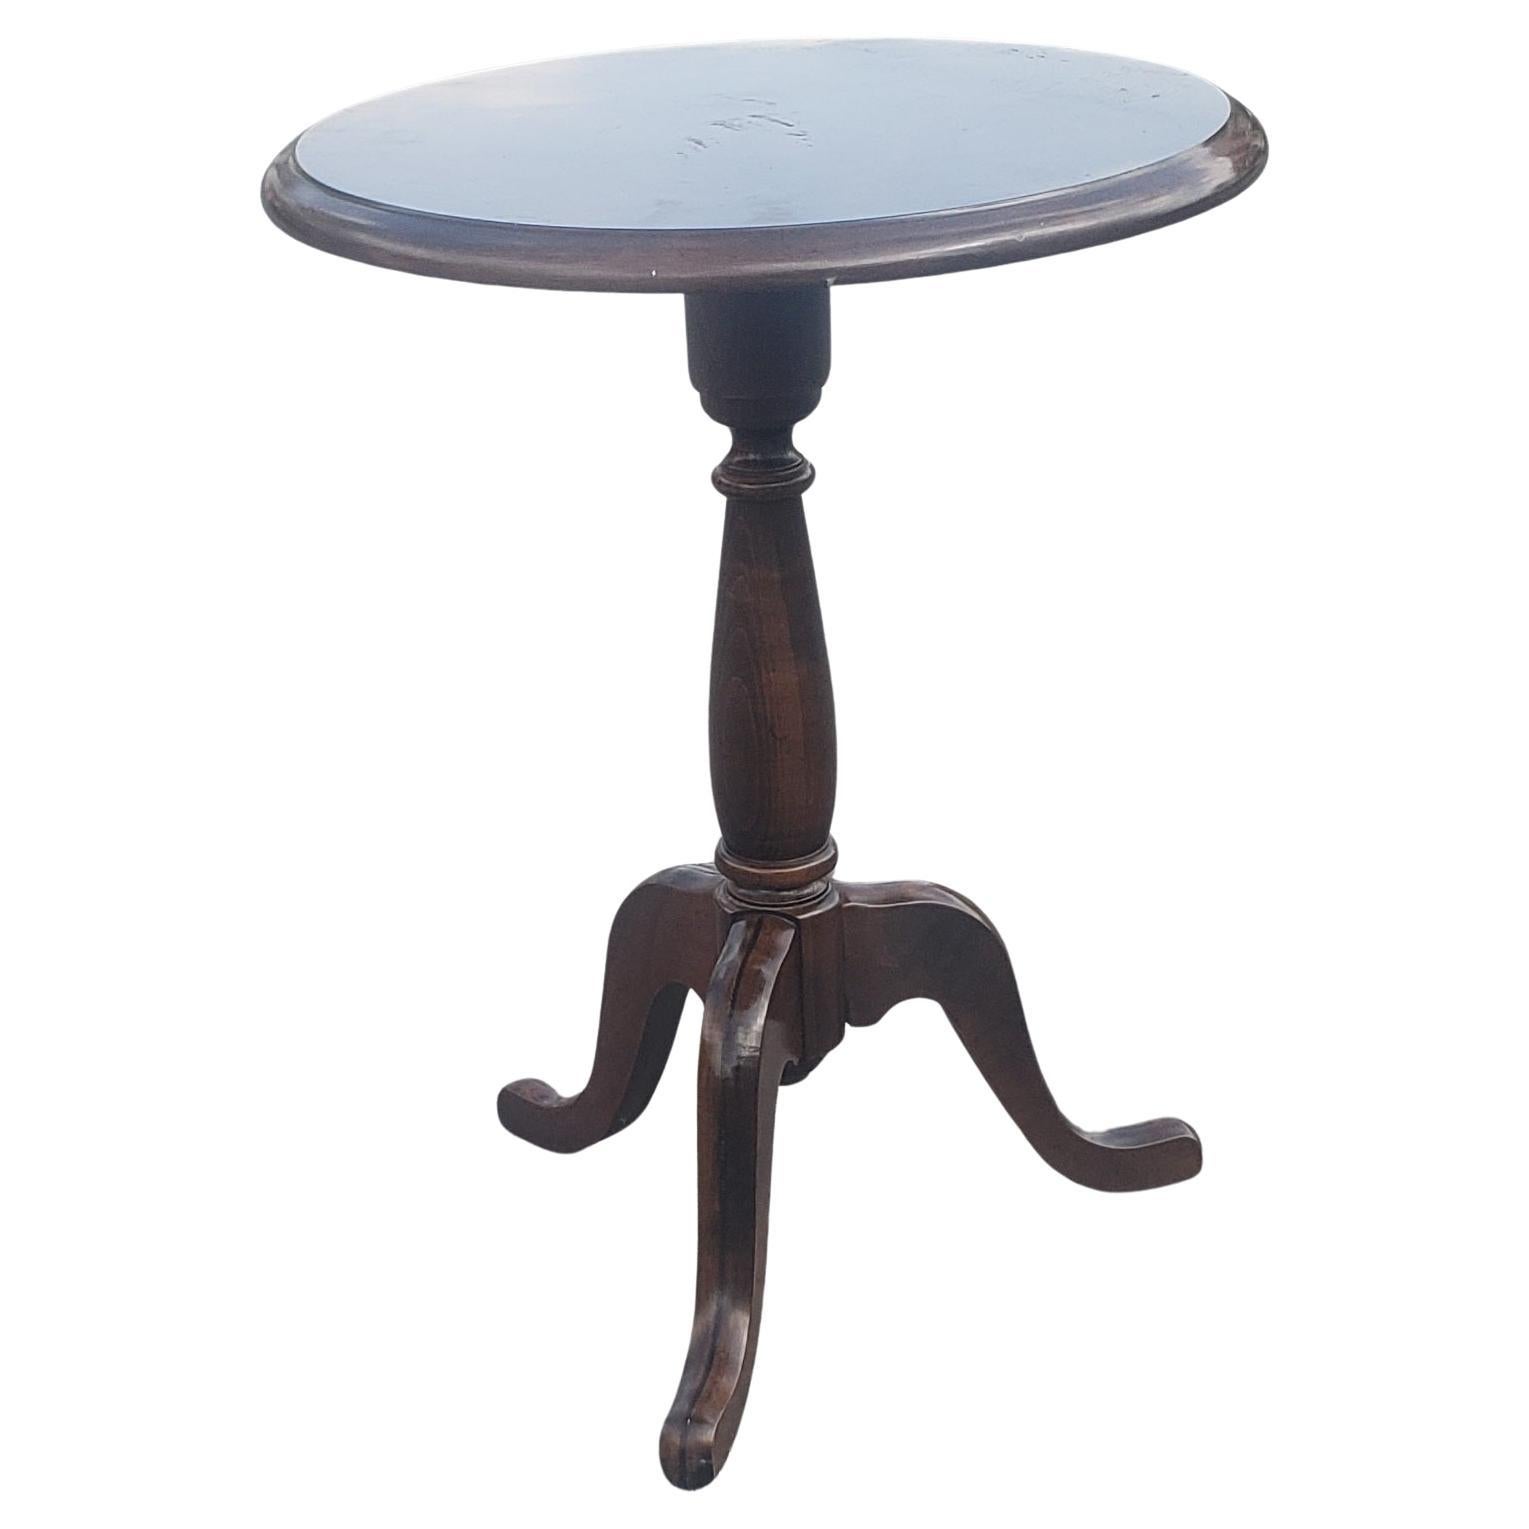 Mersman midcentury solid cherry Pedestal Tripod lamp Table measuring 16.5 